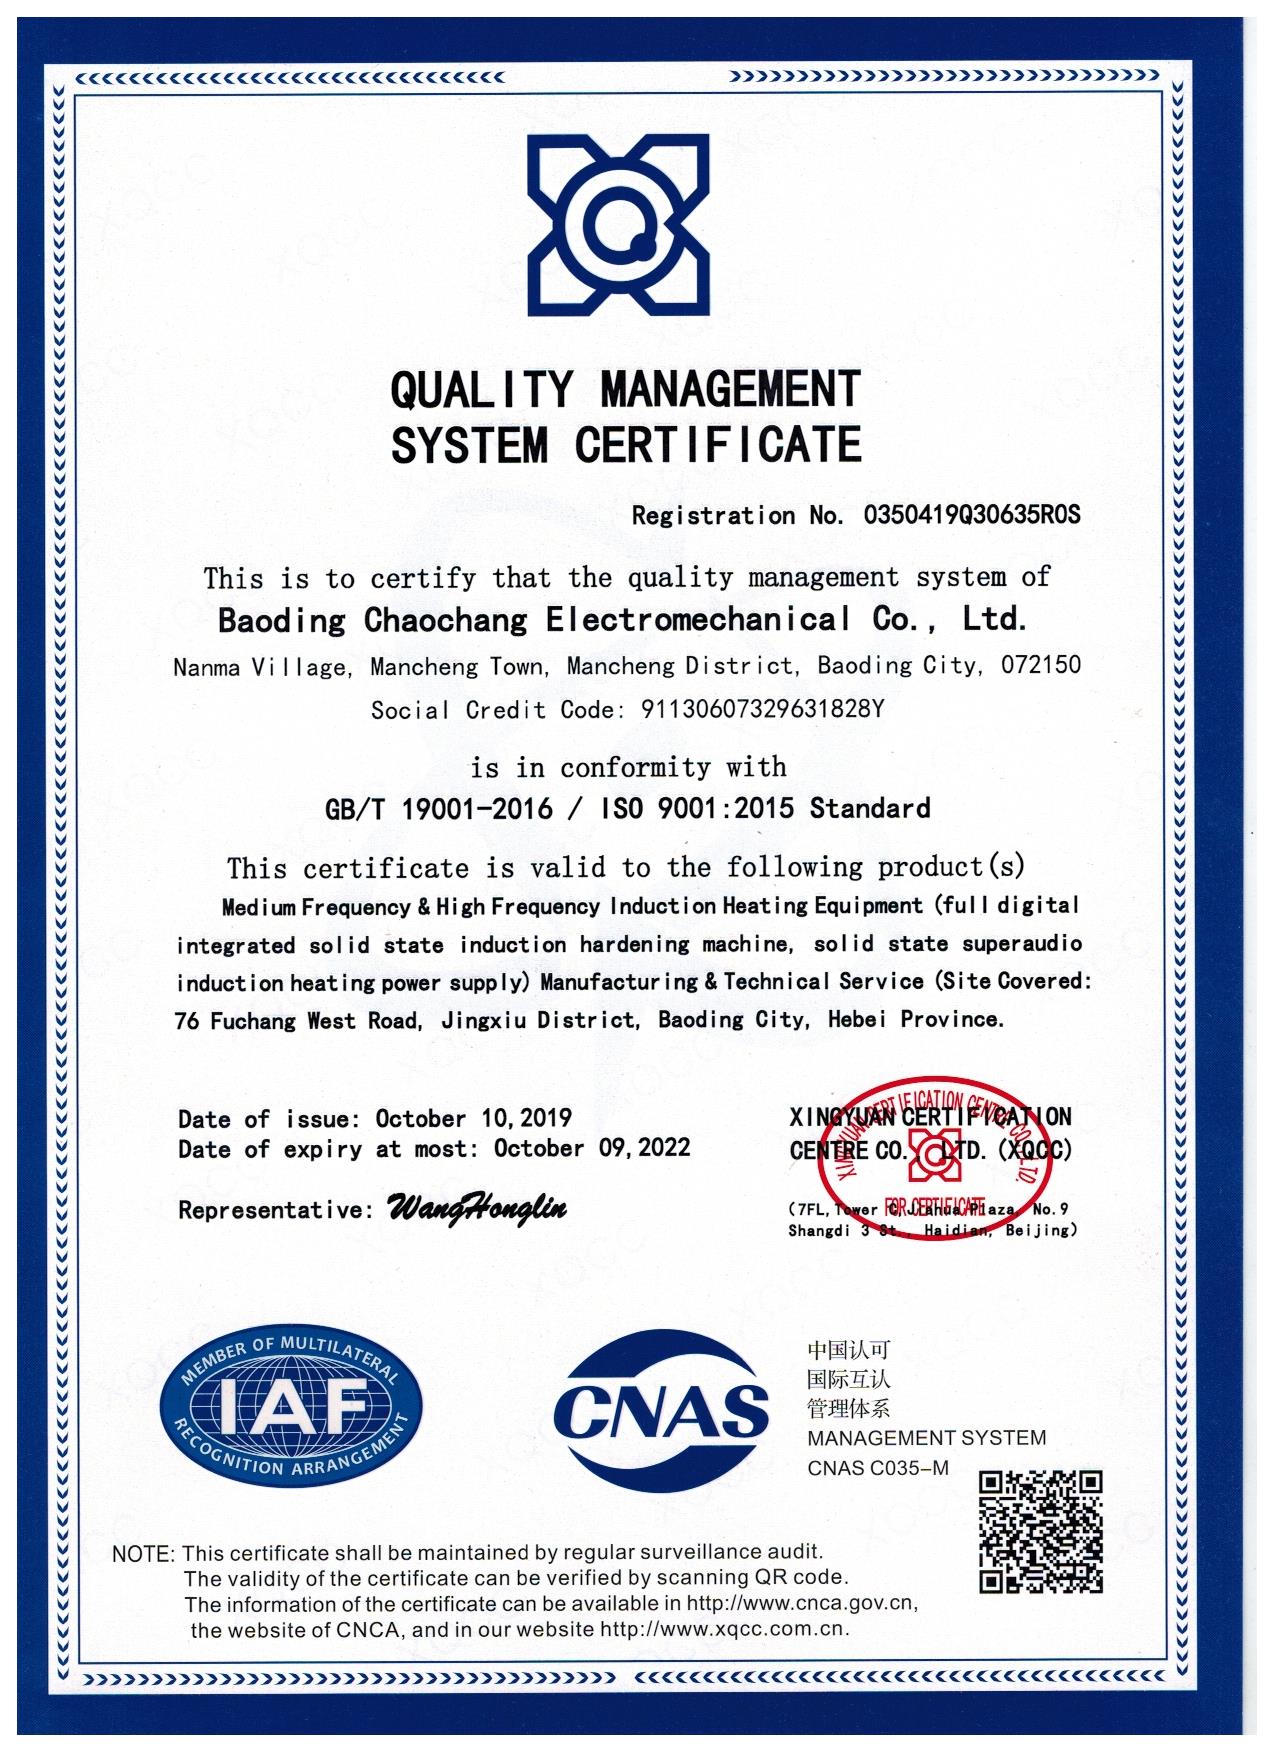 Chaochang Induction has got the ISO certificate